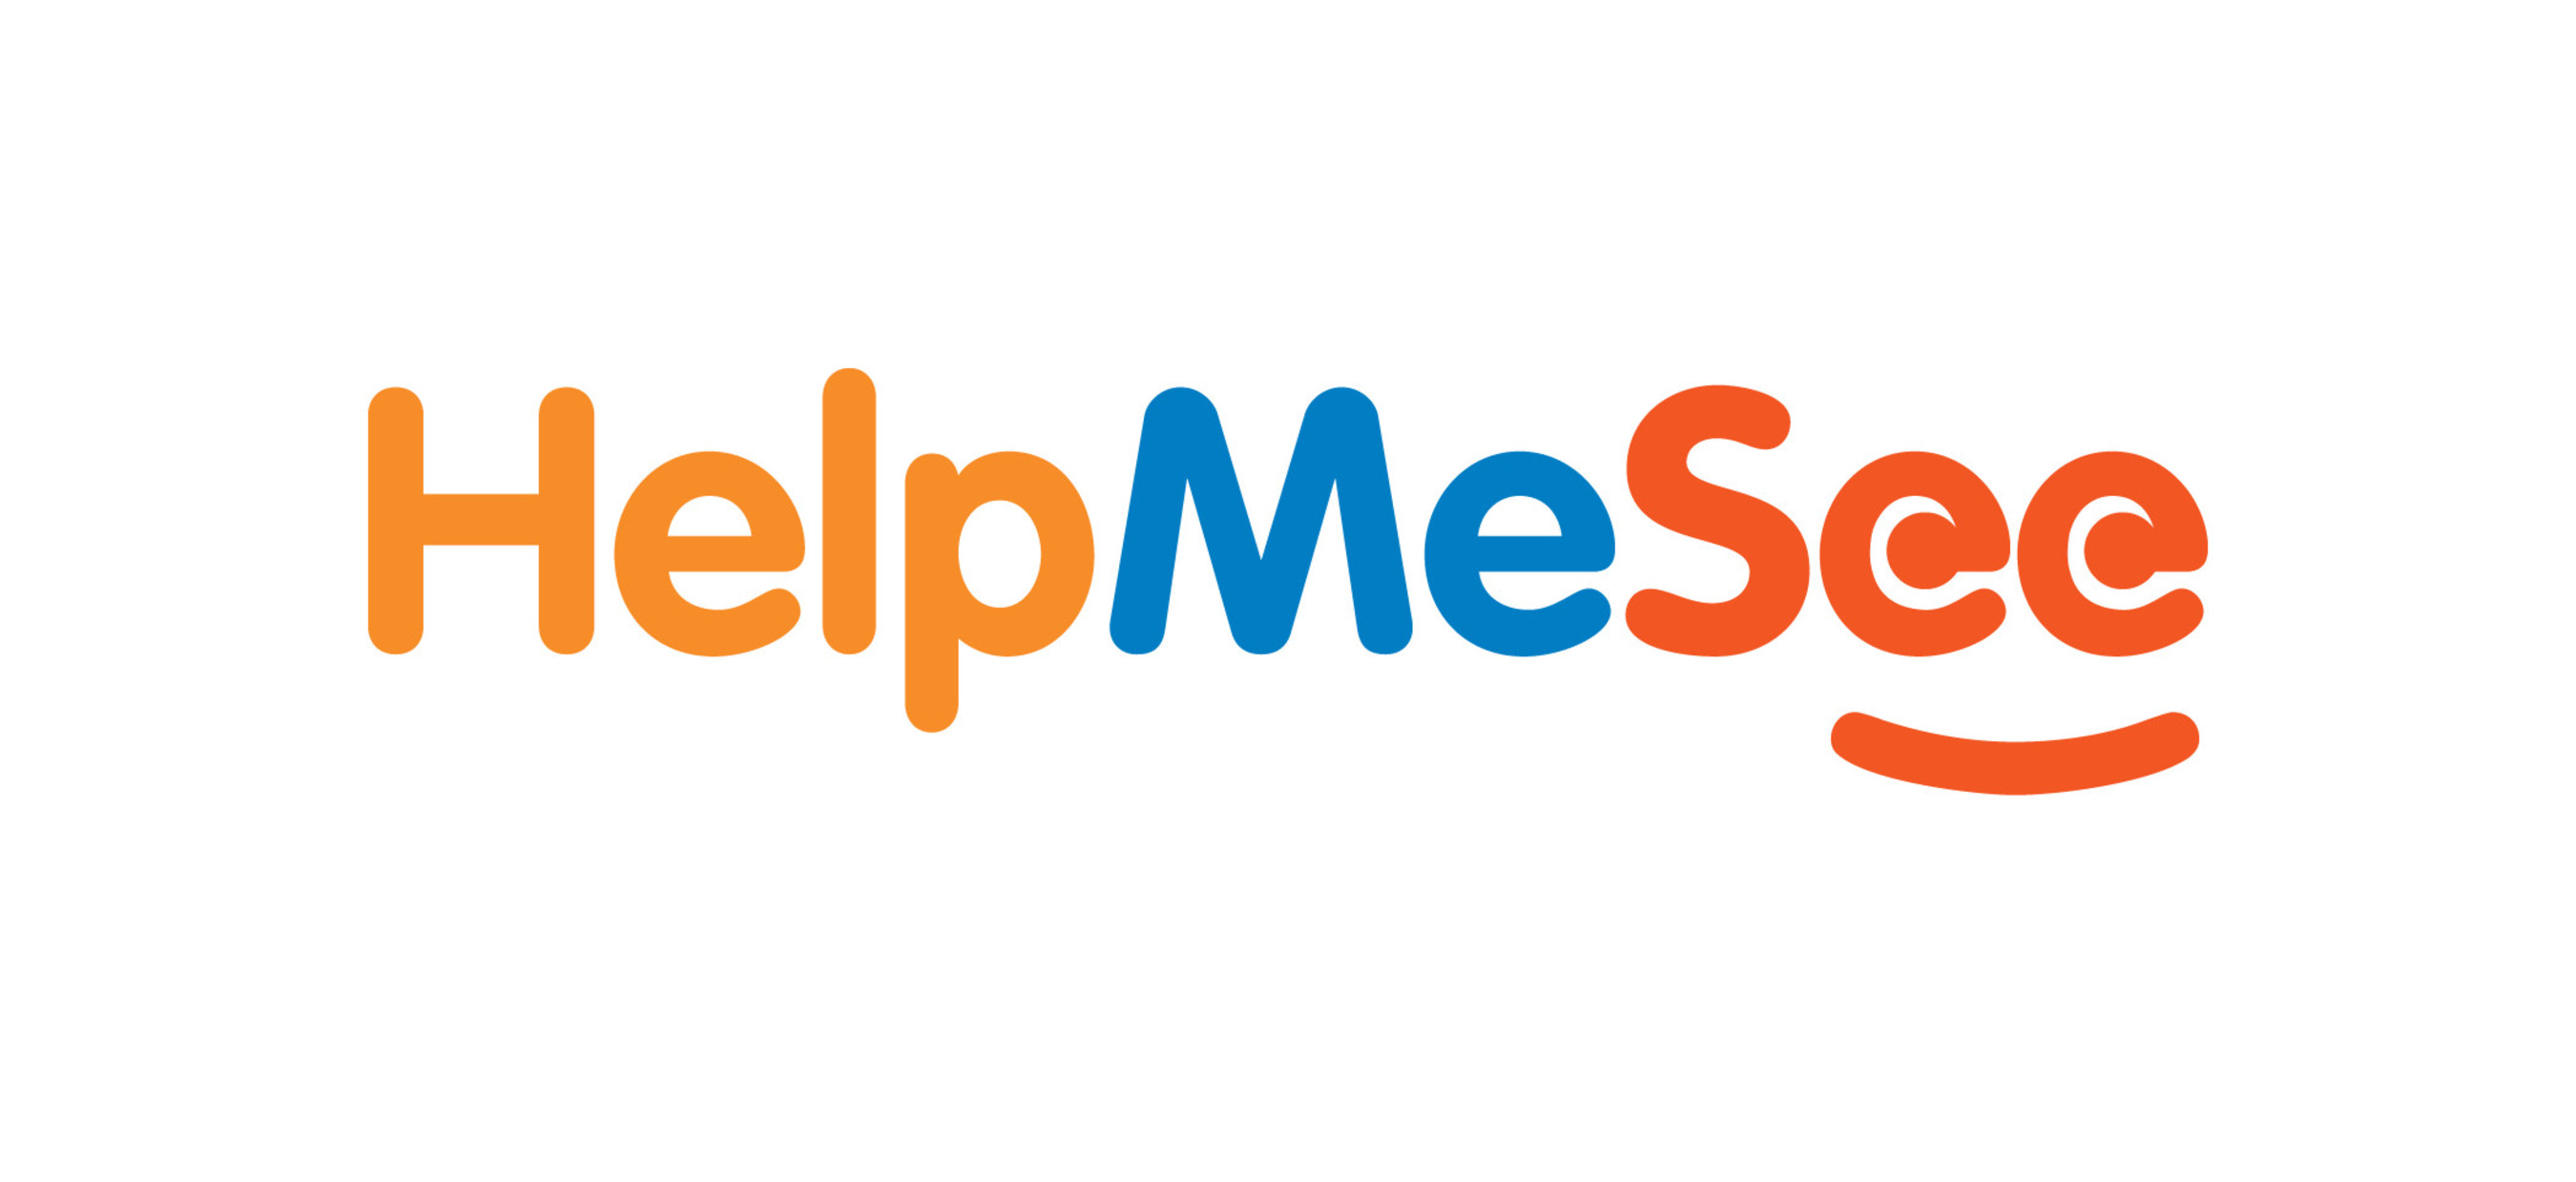 HelpMeSee Logo. (PRNewsFoto/HELPMESEE)